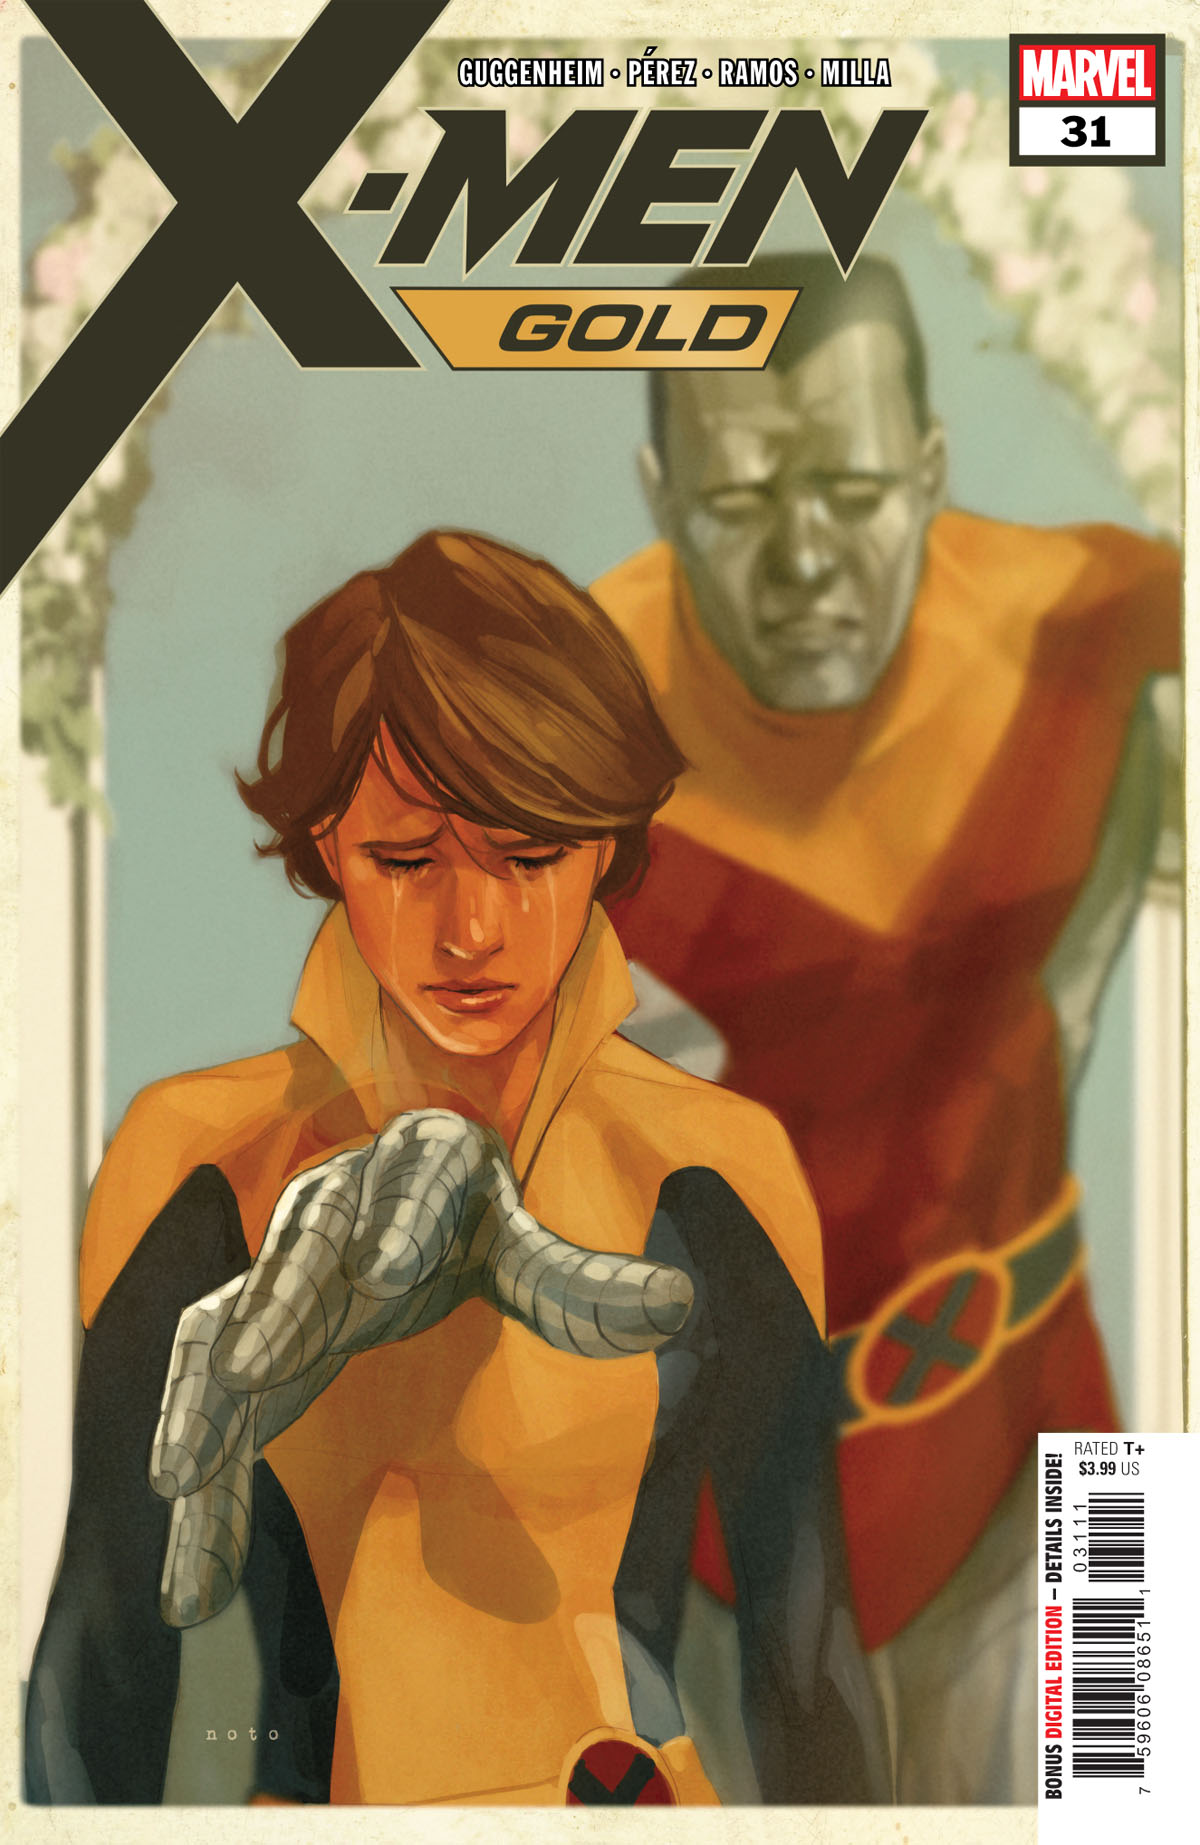 X-Men Gold #31 cover